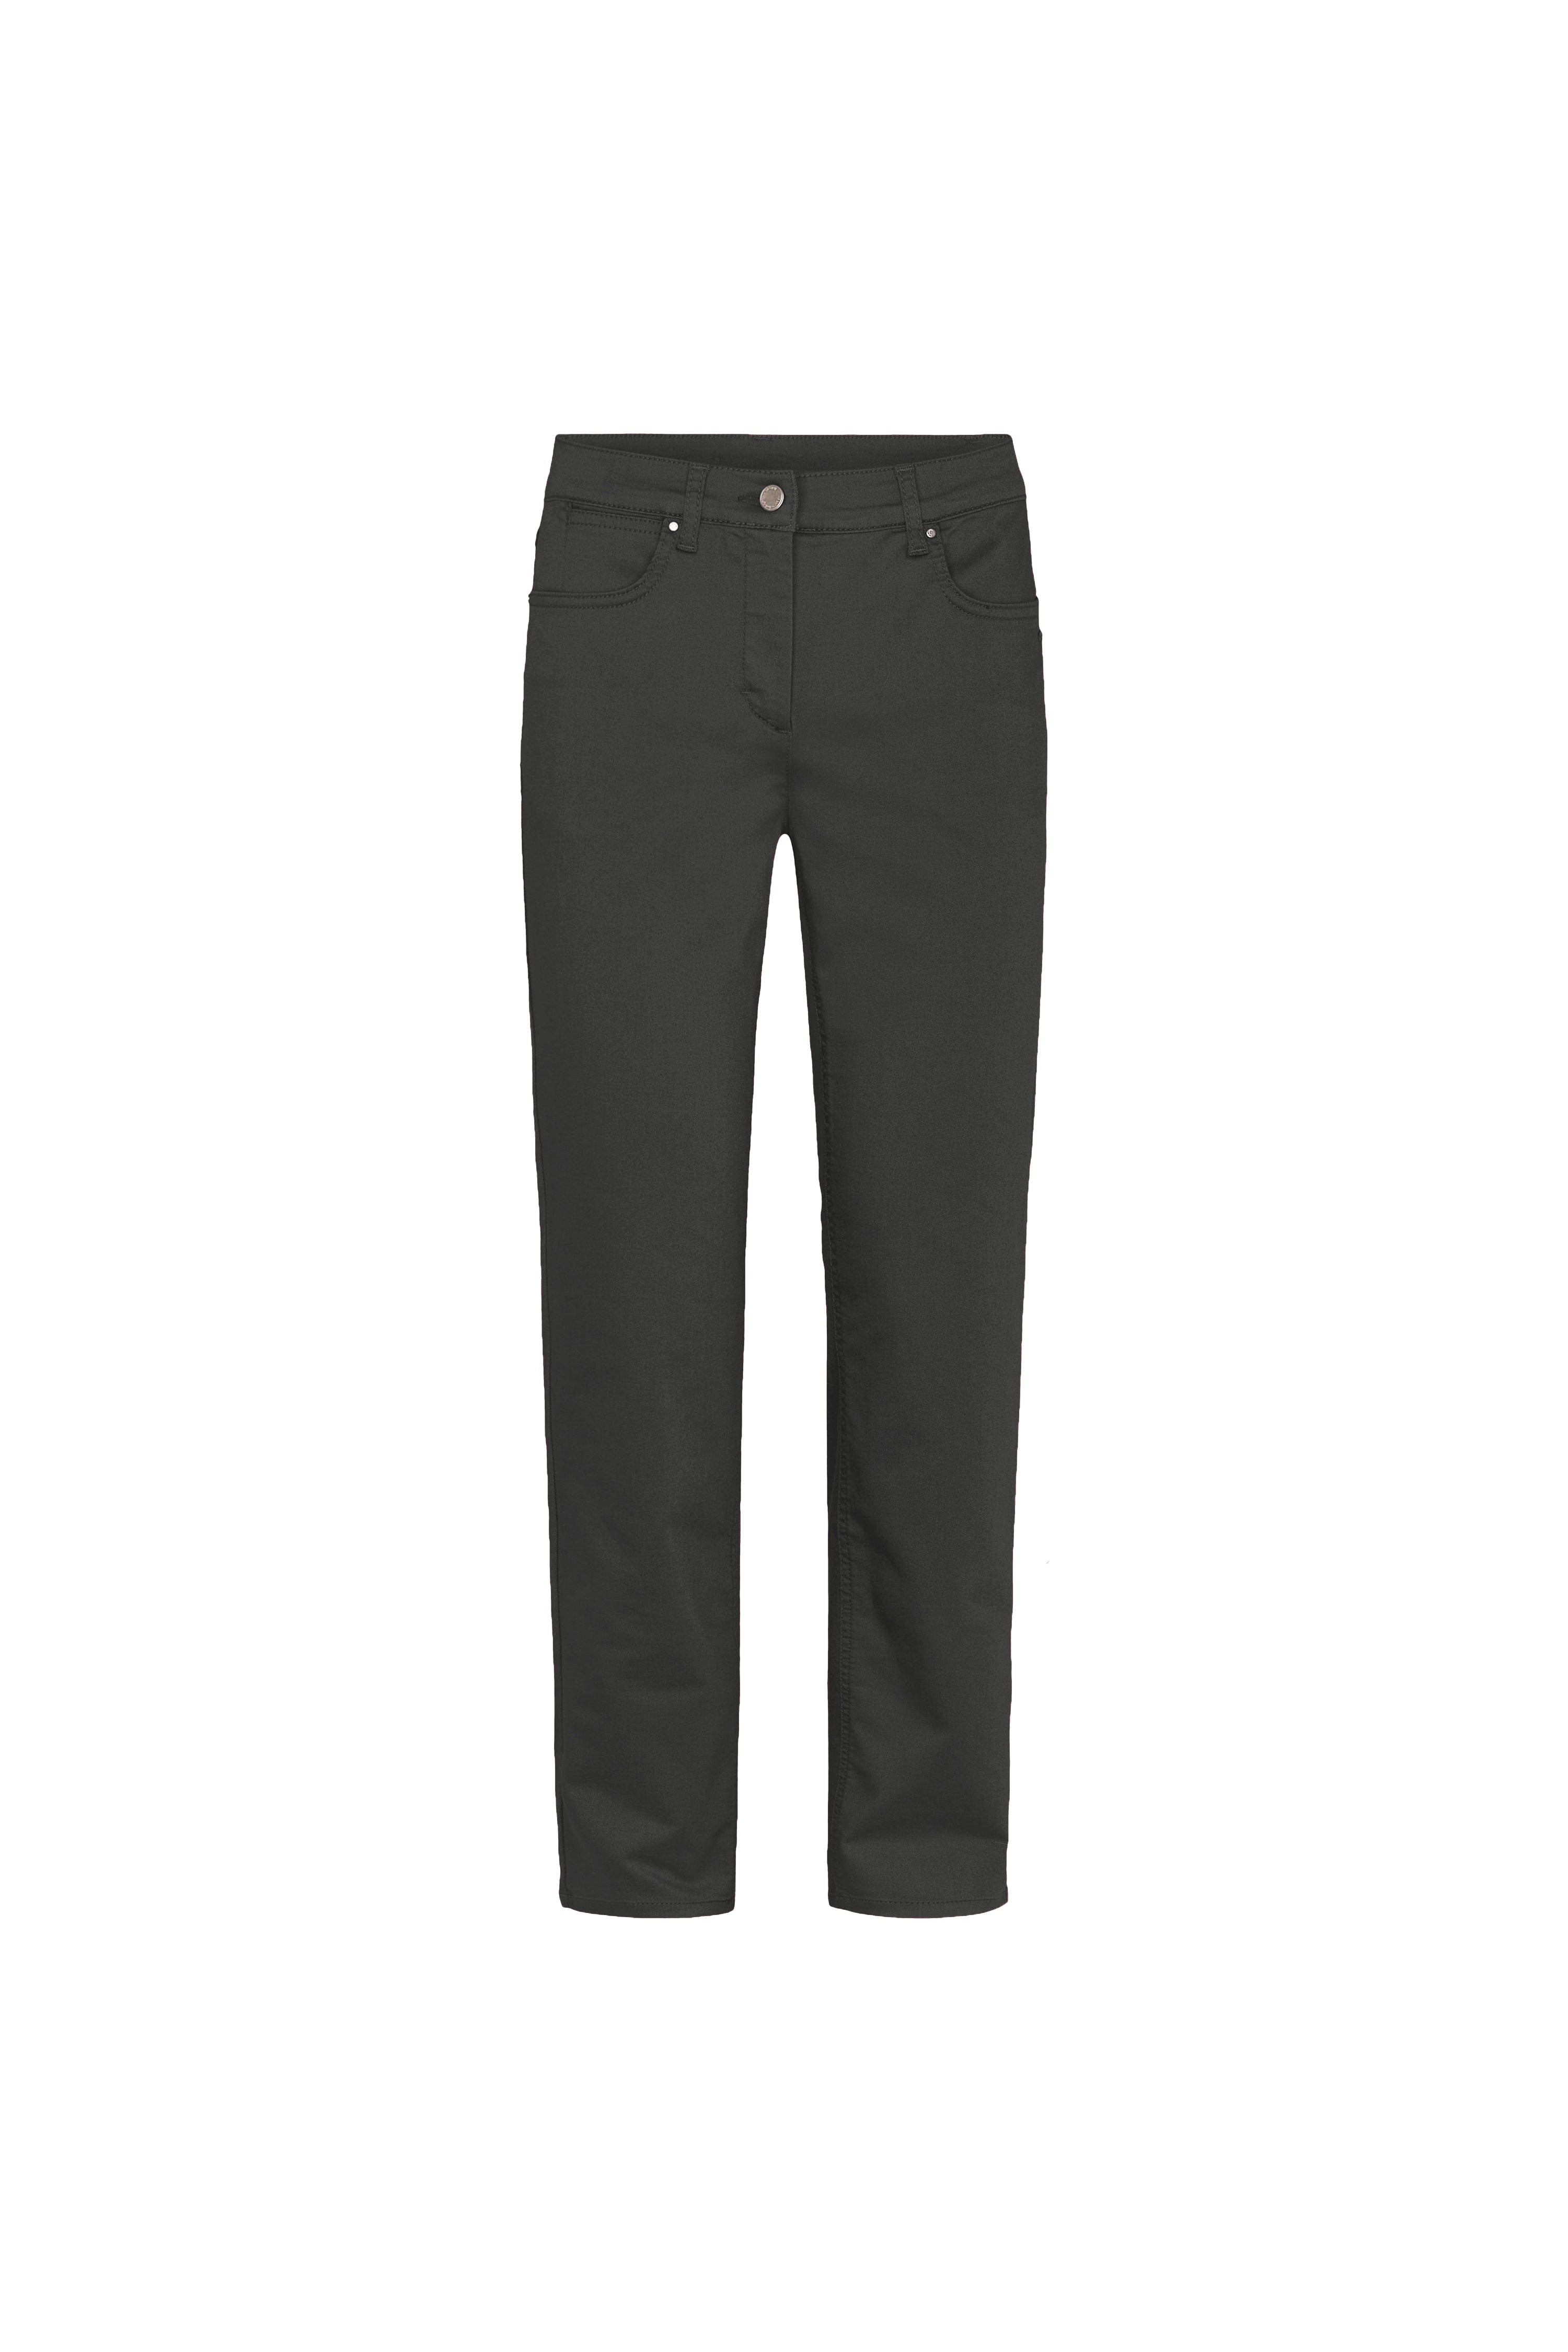 LAURIE Charlotte Regular - Medium Length Trousers REGULAR 99100 Black